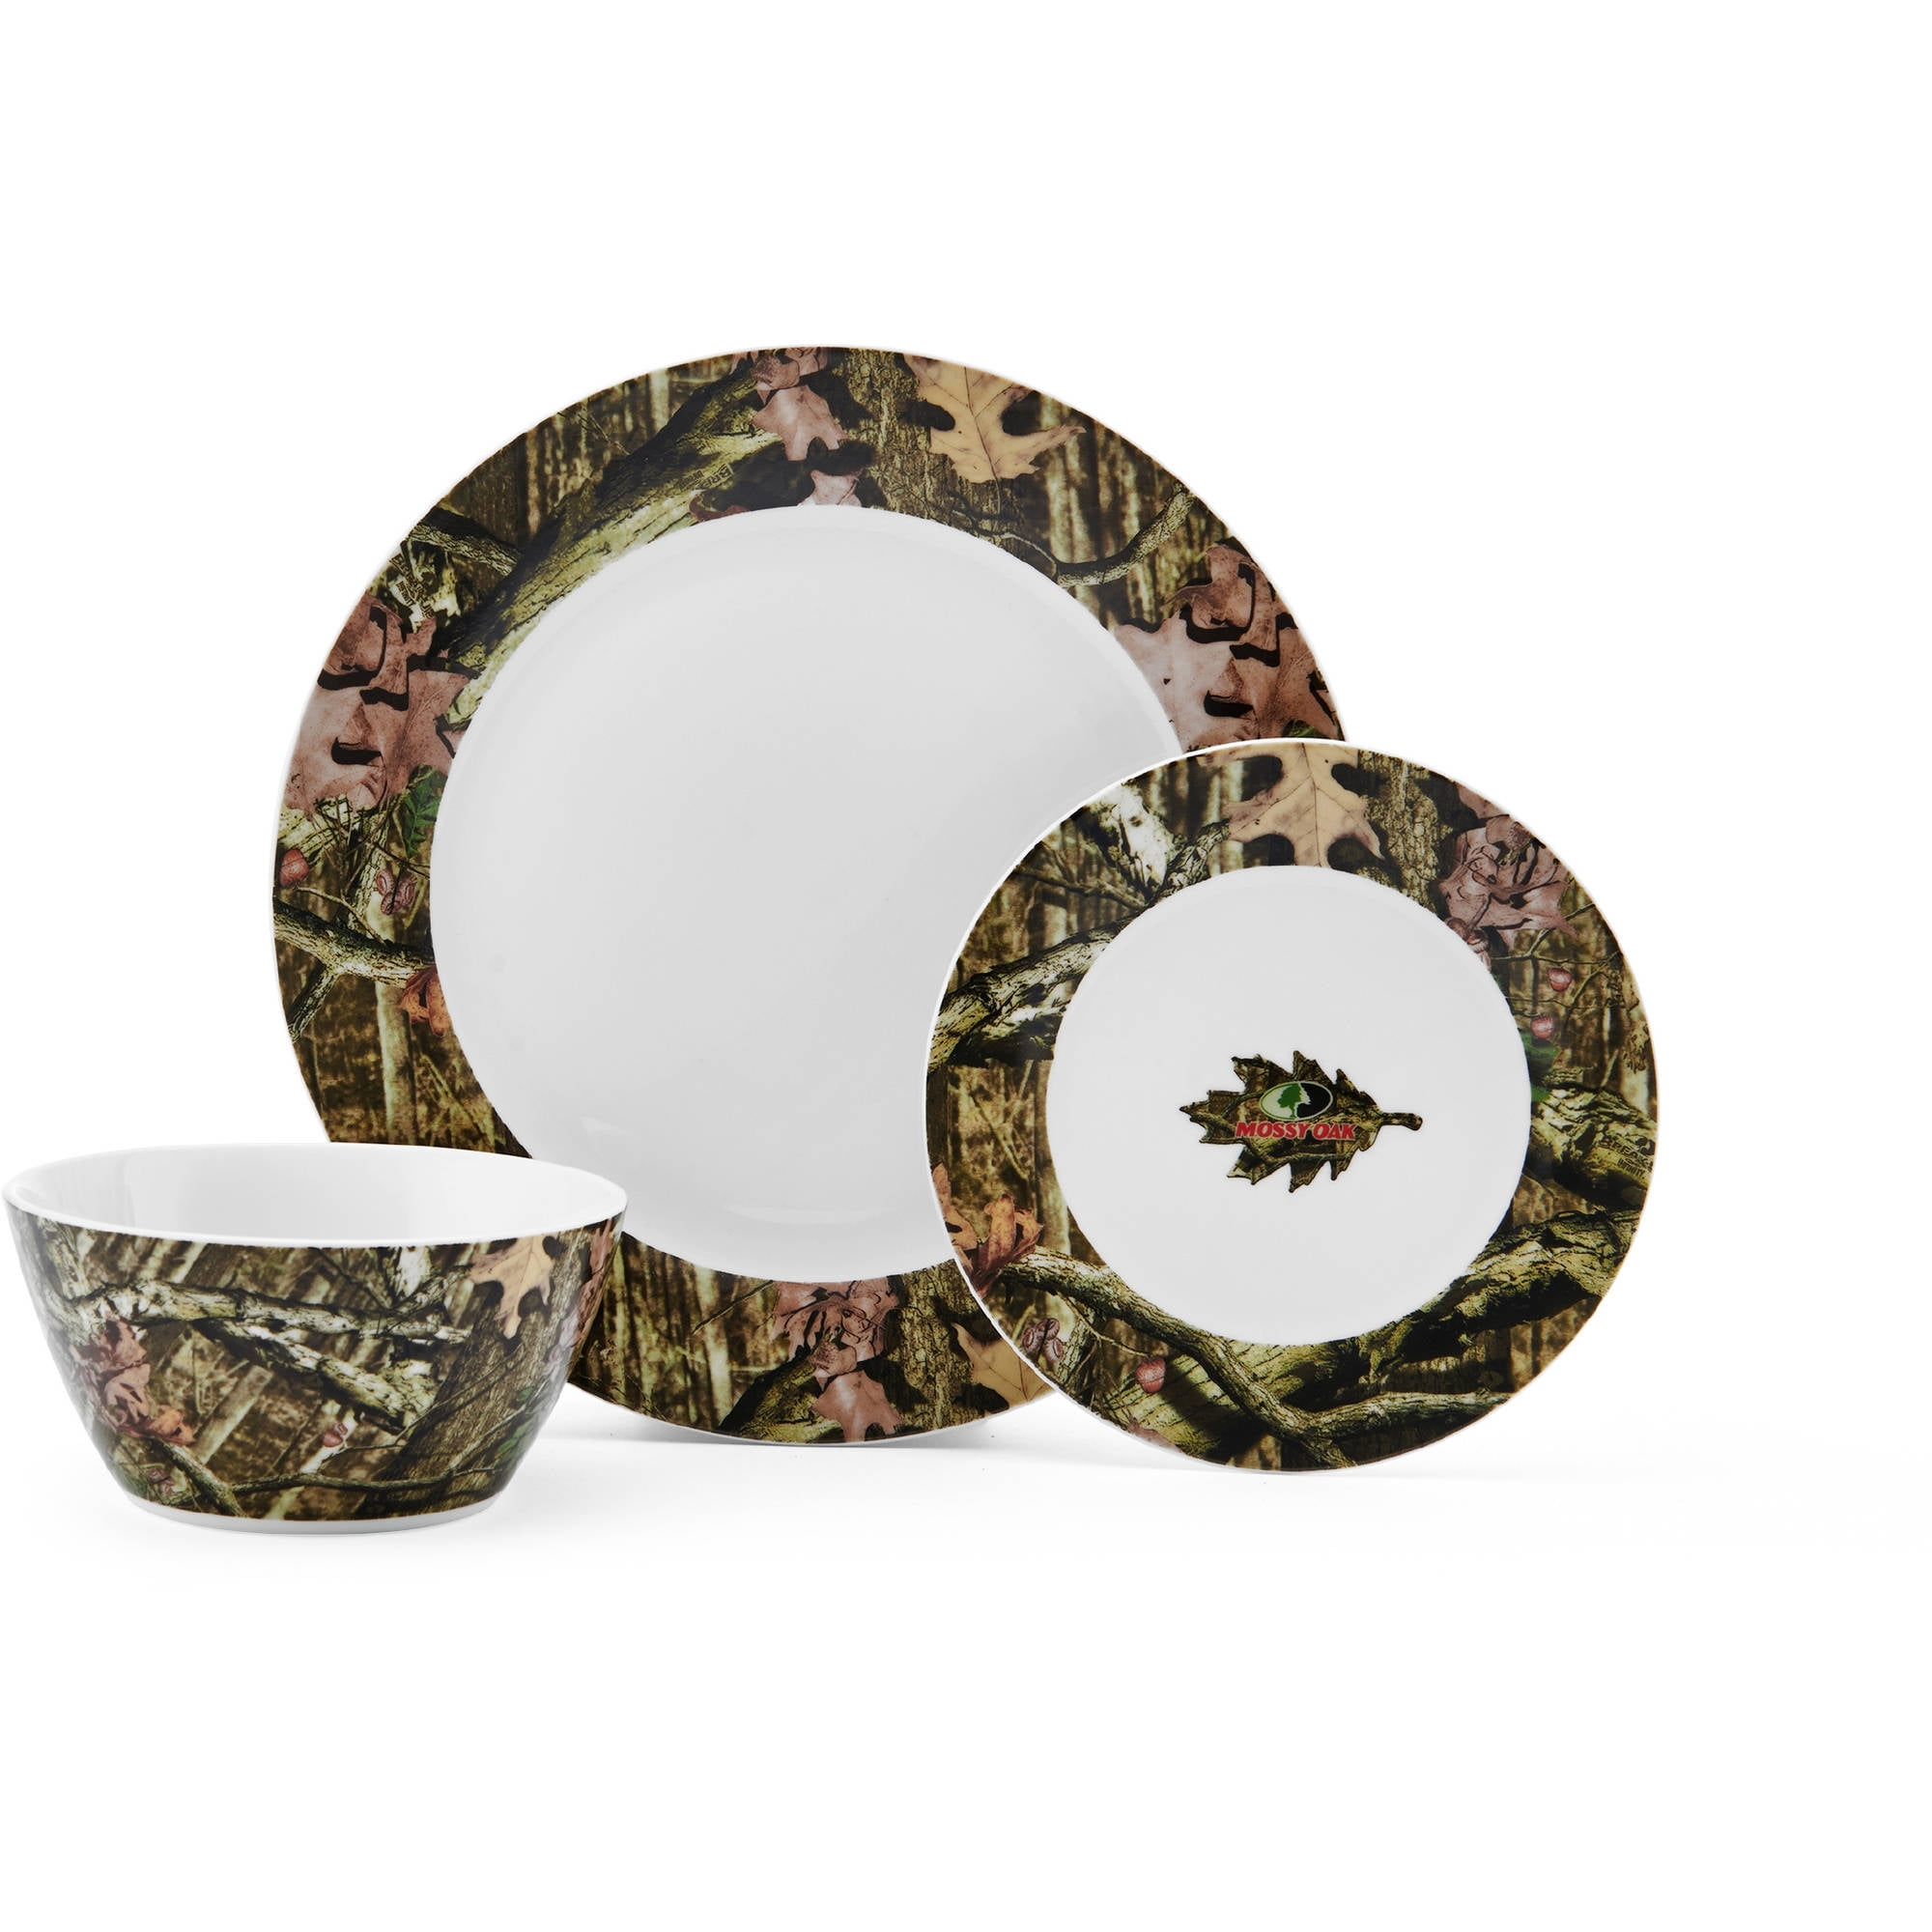 Mossy Oak 16-Piece Break-Up Infinity Dinnerware Set, Service for 4 : Home &...